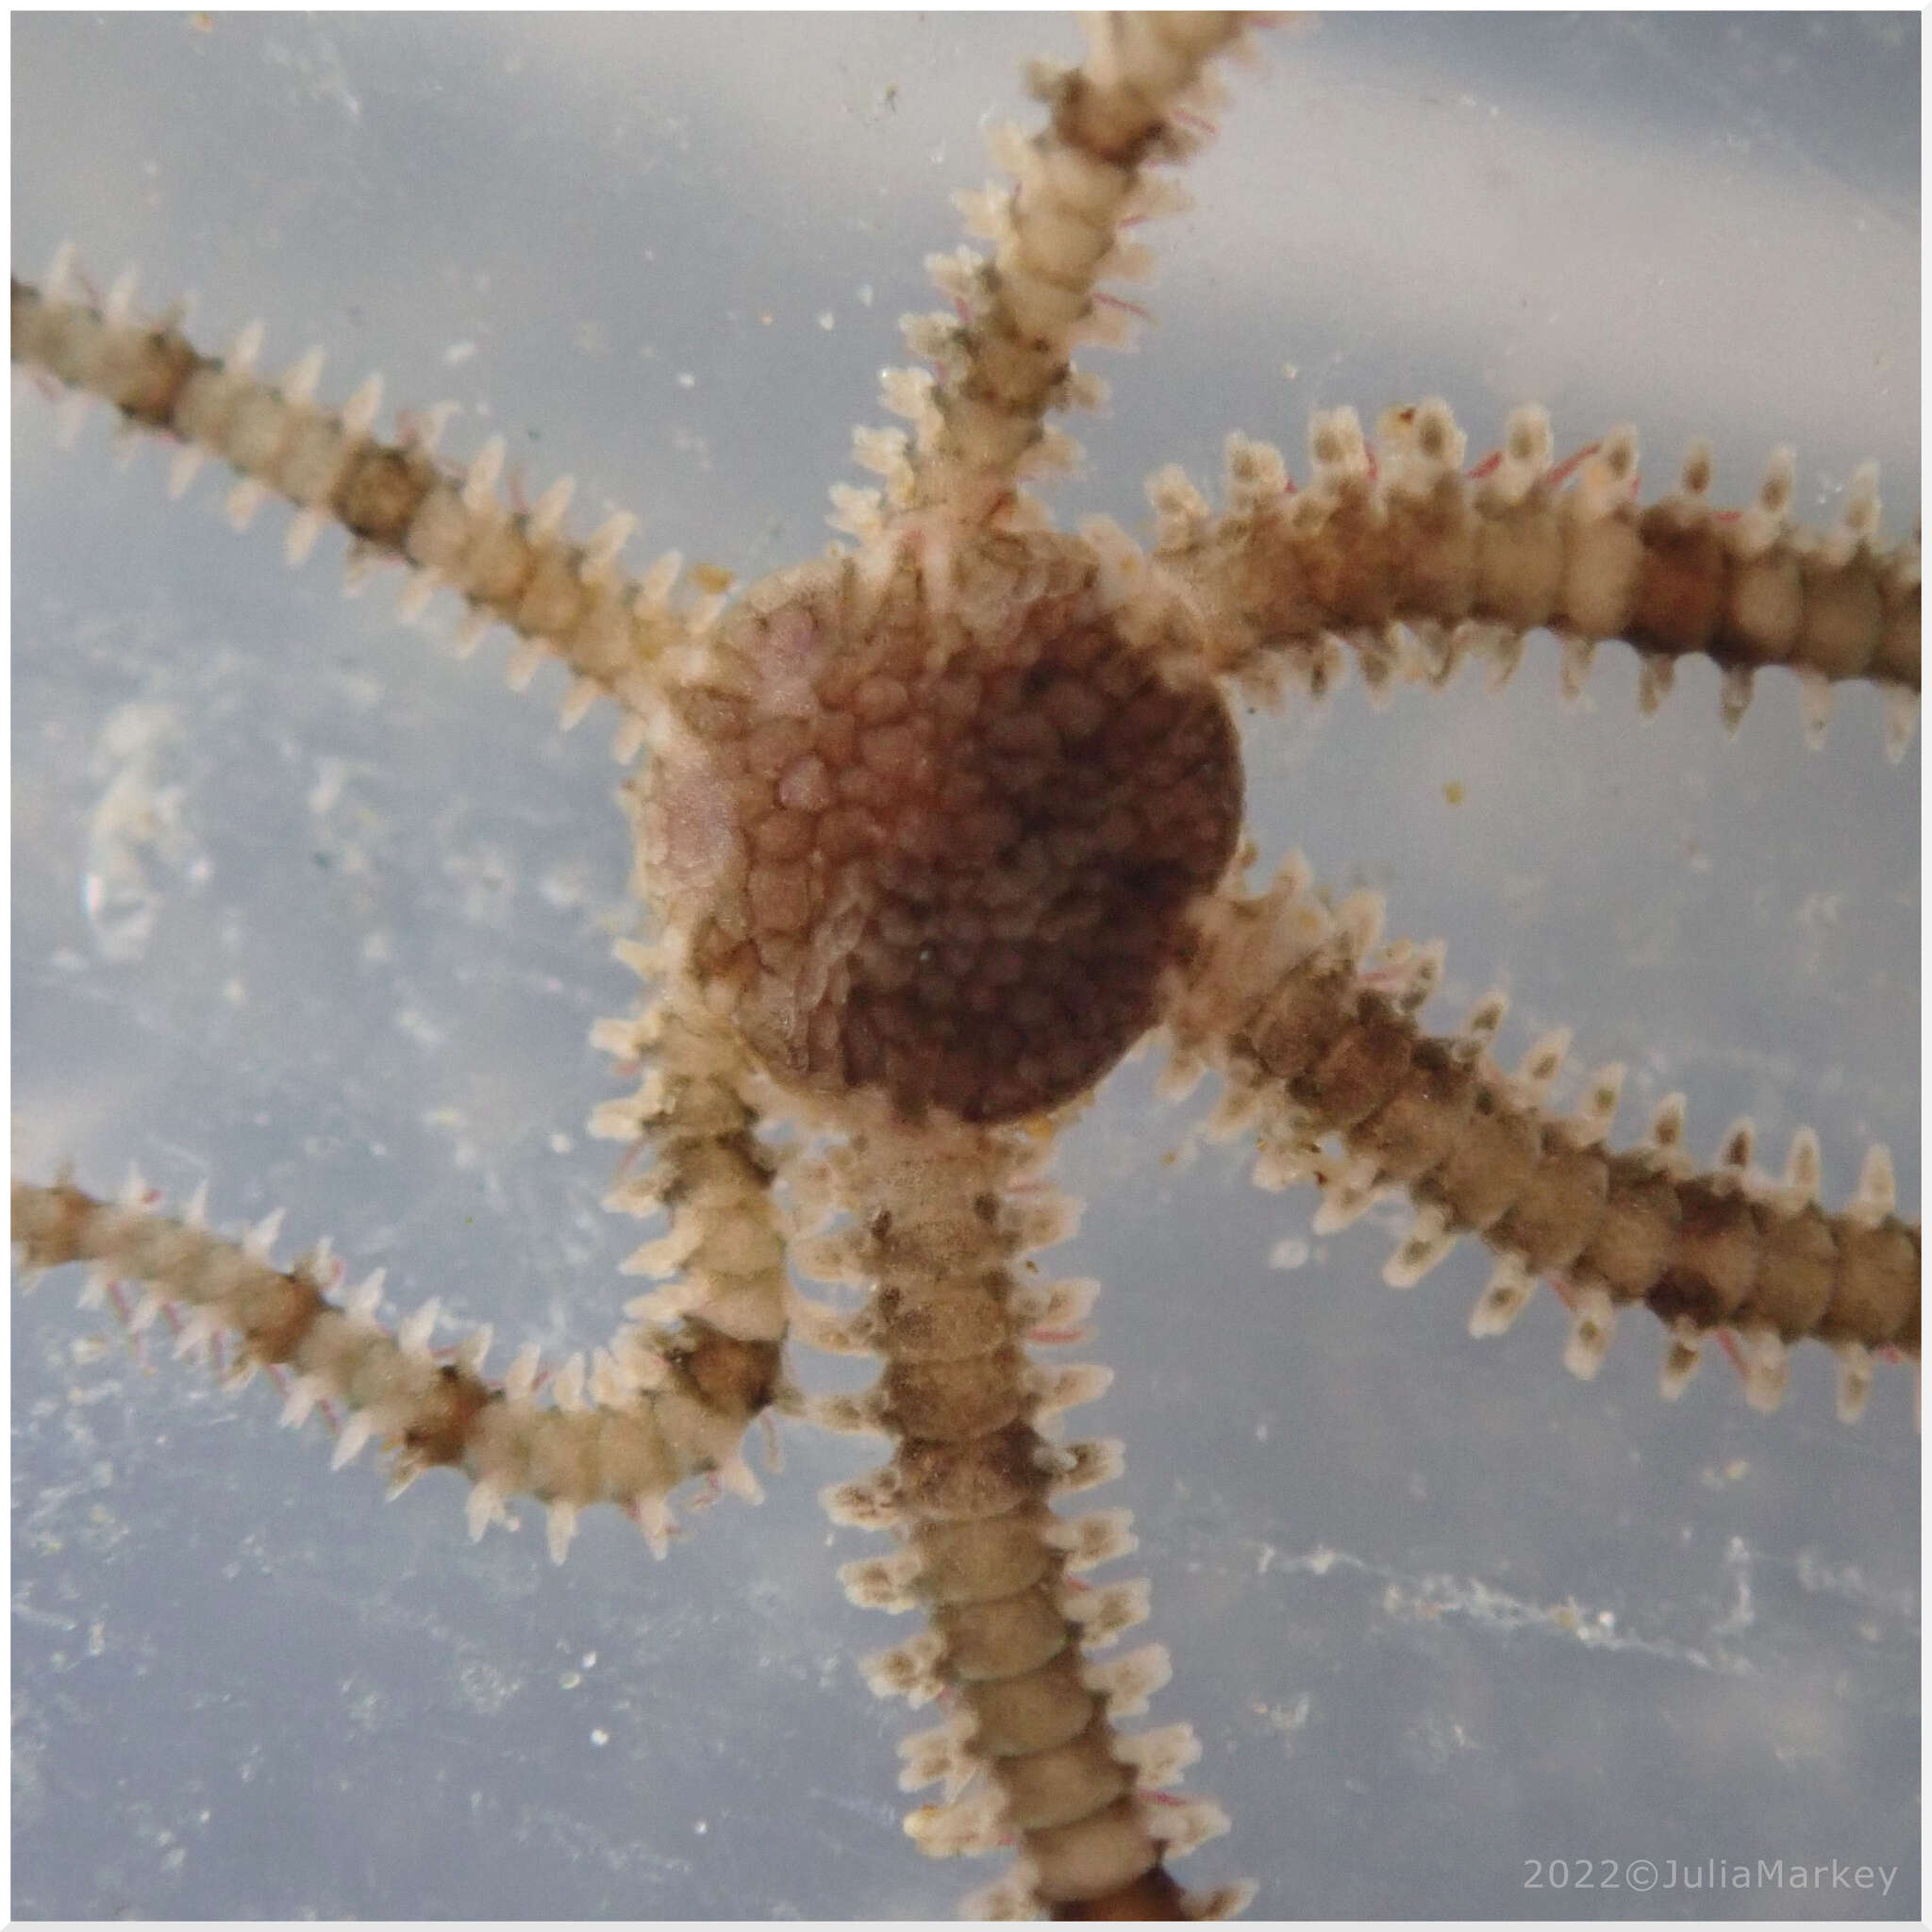 Image of Savigny's brittle star